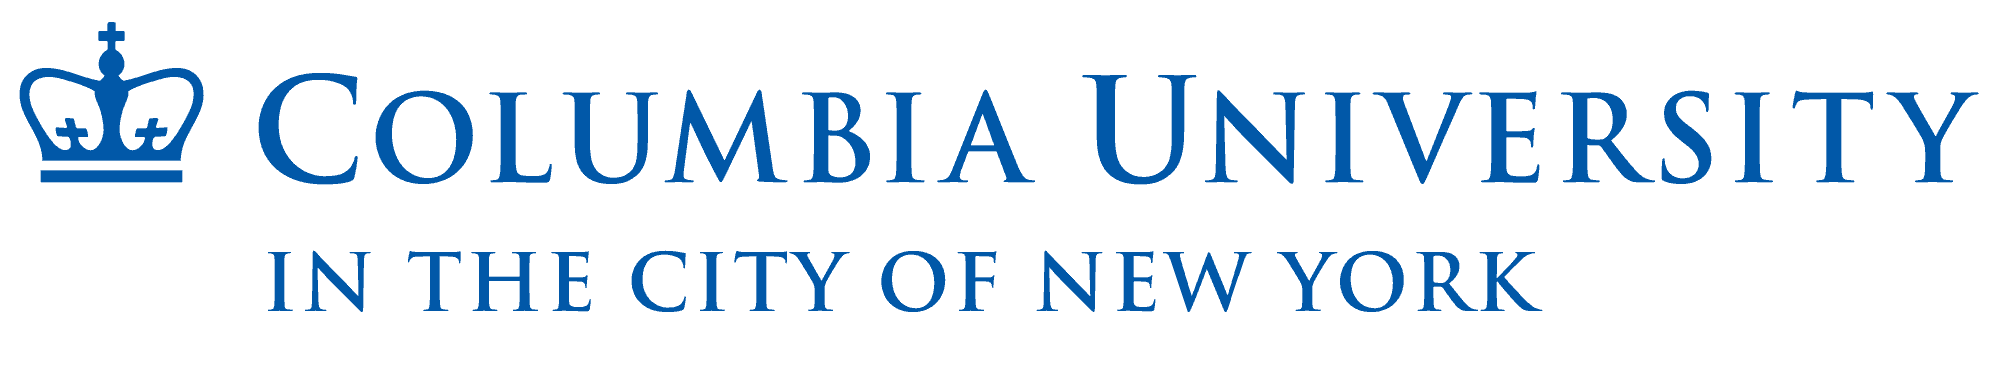 Columbia Univ logo